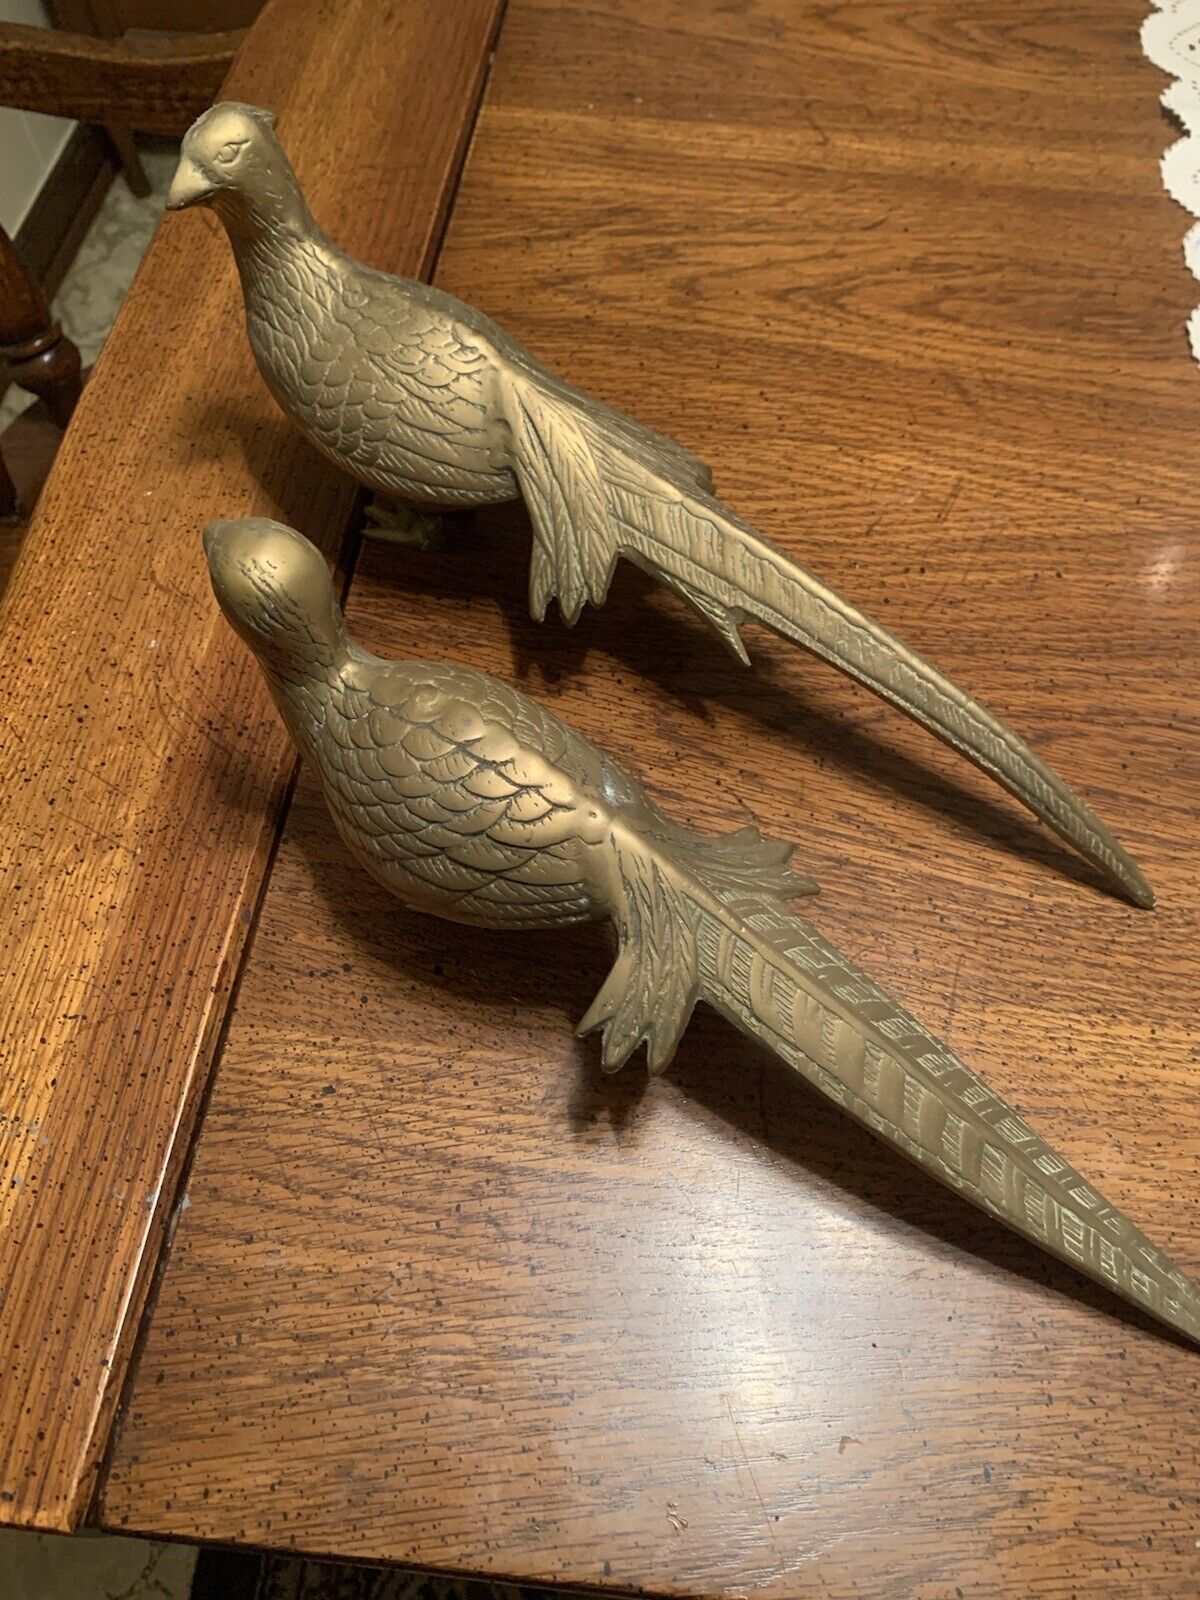 Vntage brass pheasant figurine pair-excellent condition